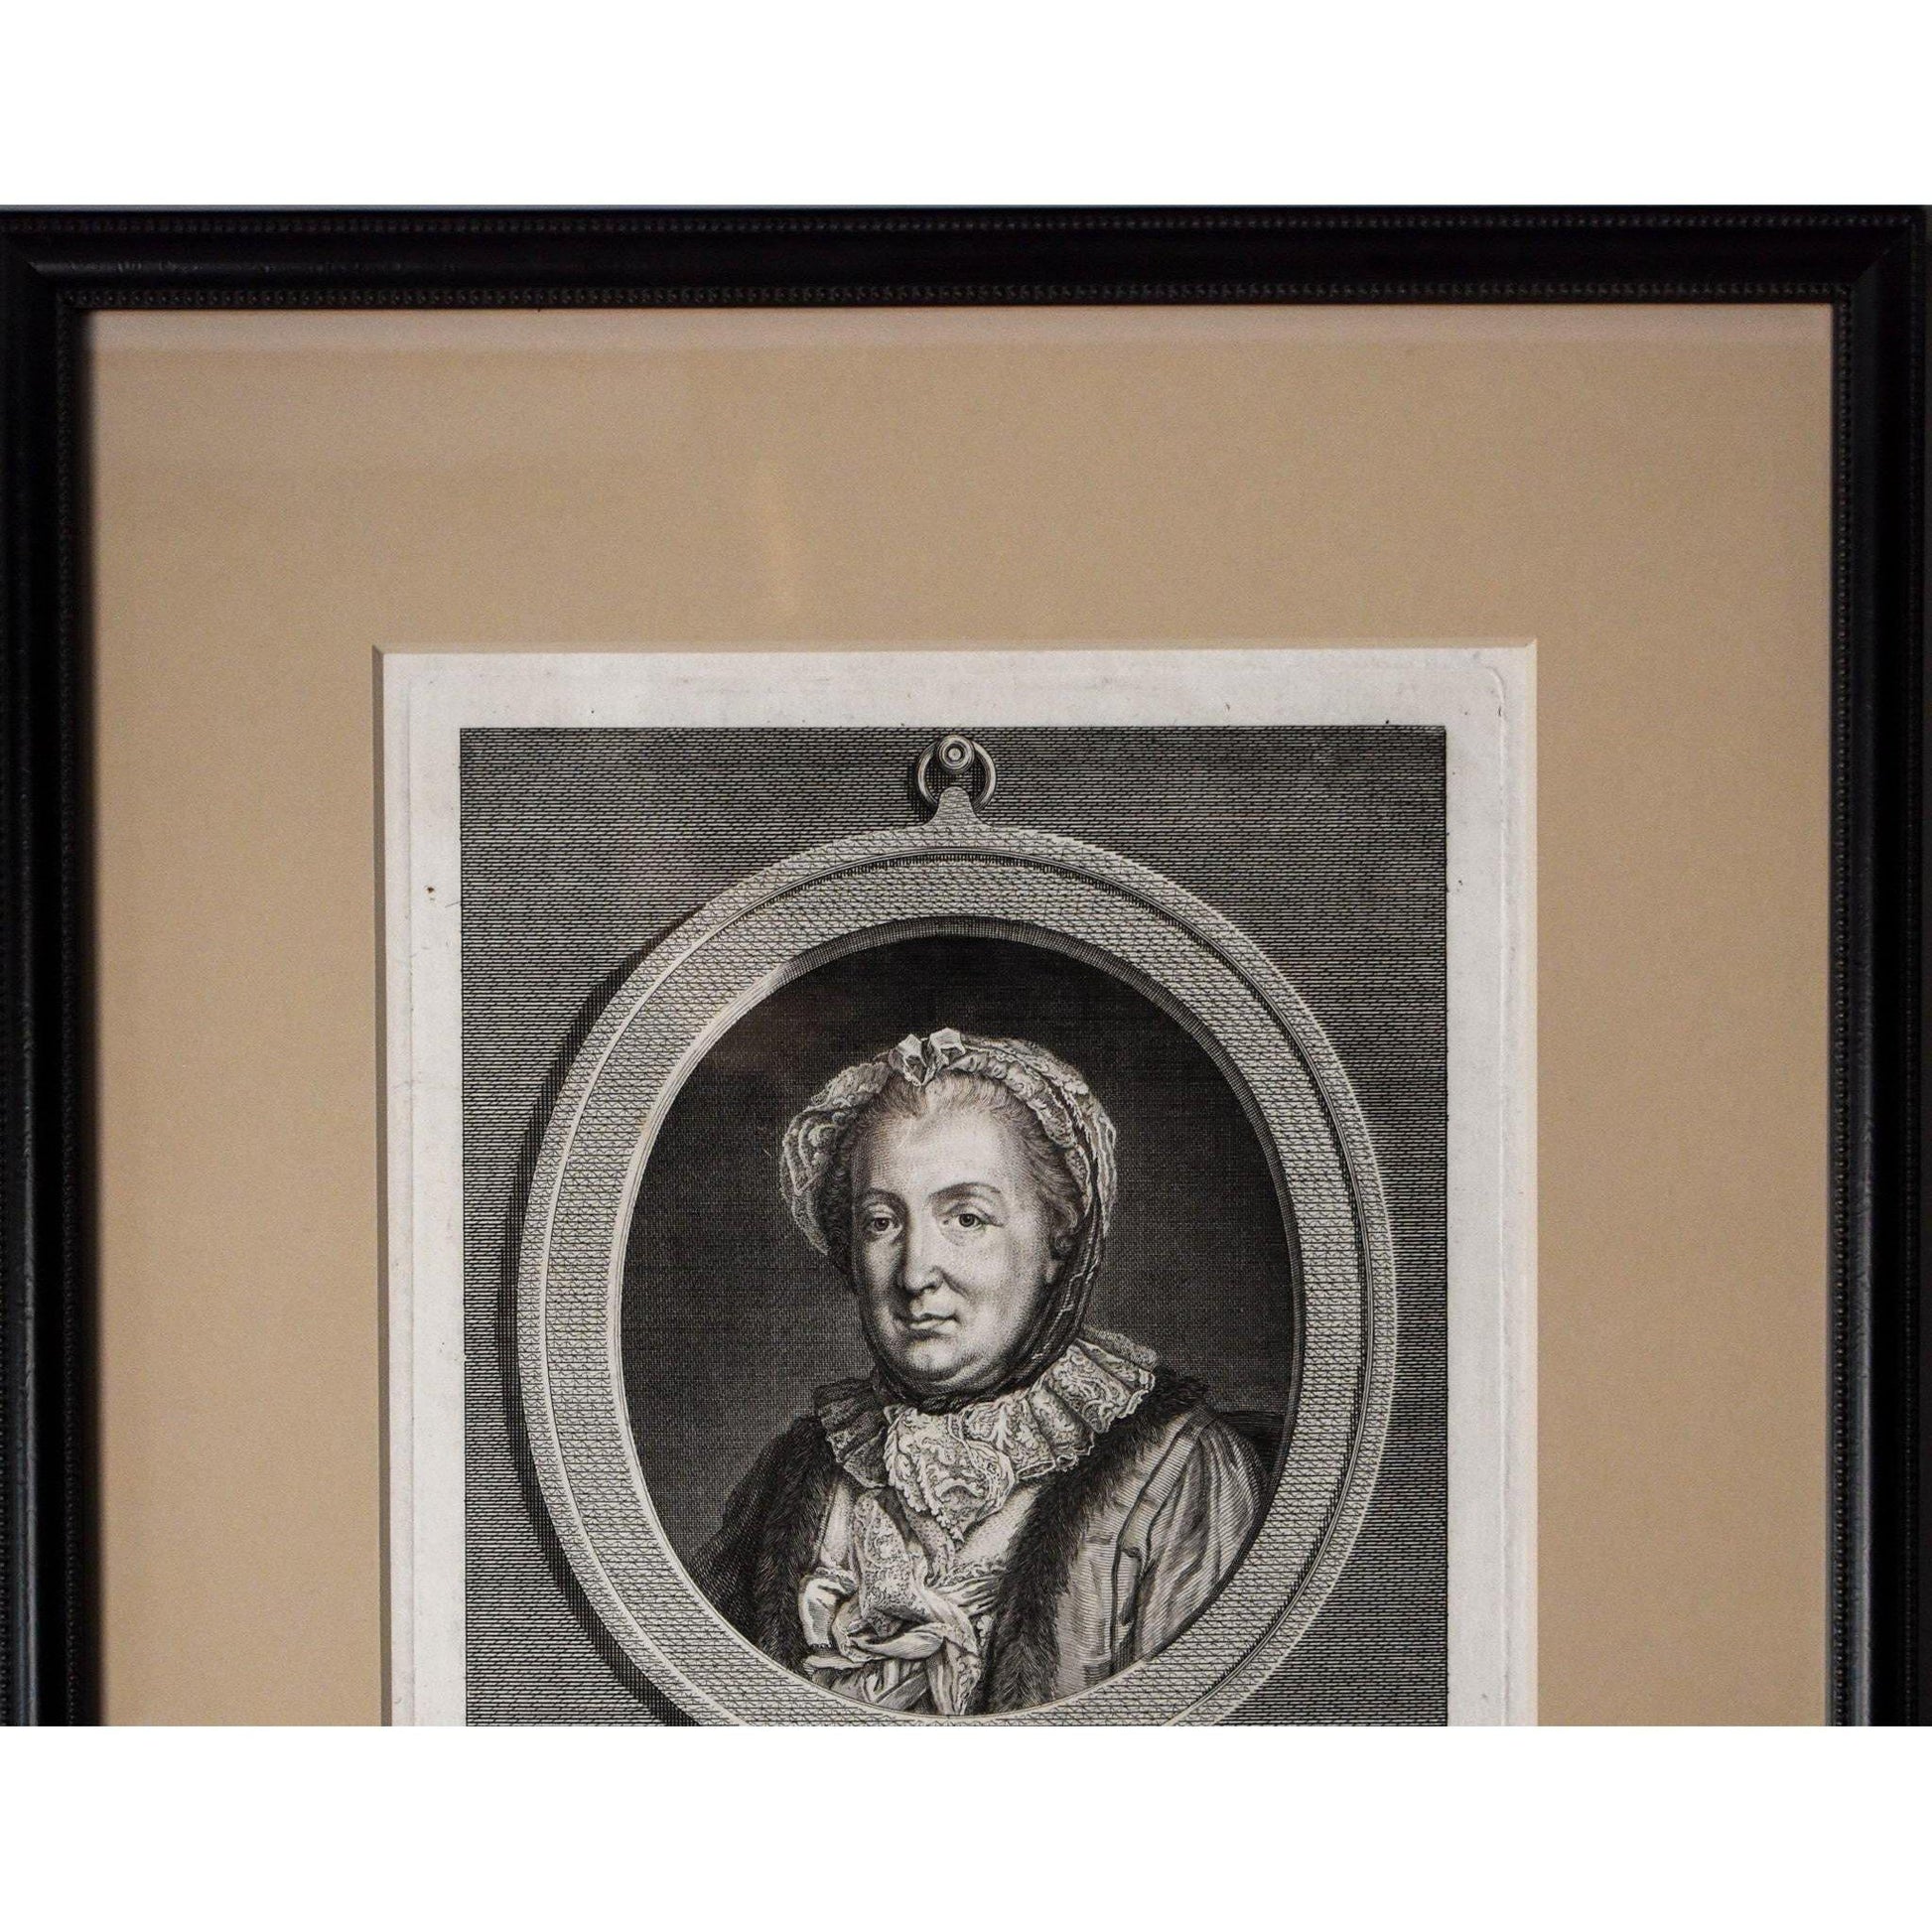 Antique etching portrait woman writer Graffigny original 1772 by Pierre Charles Leveque for sale at Winckelmann Gallery